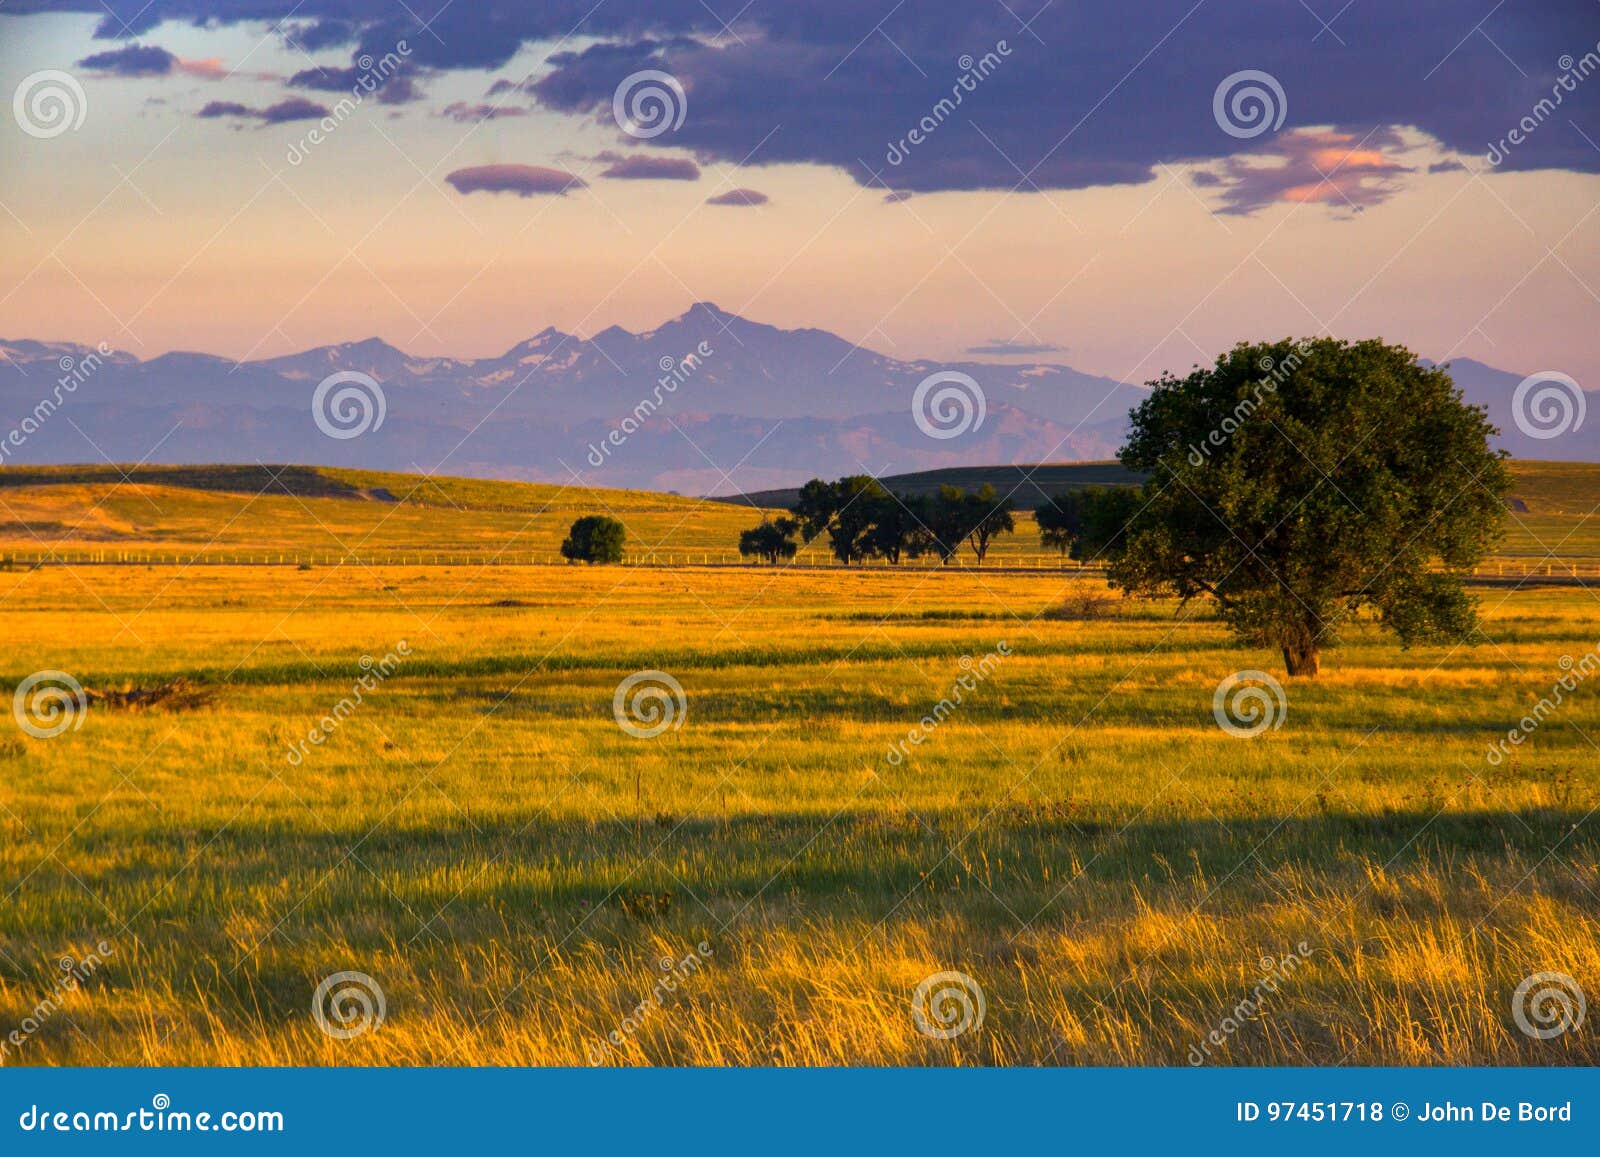 a colorado plains sunrise